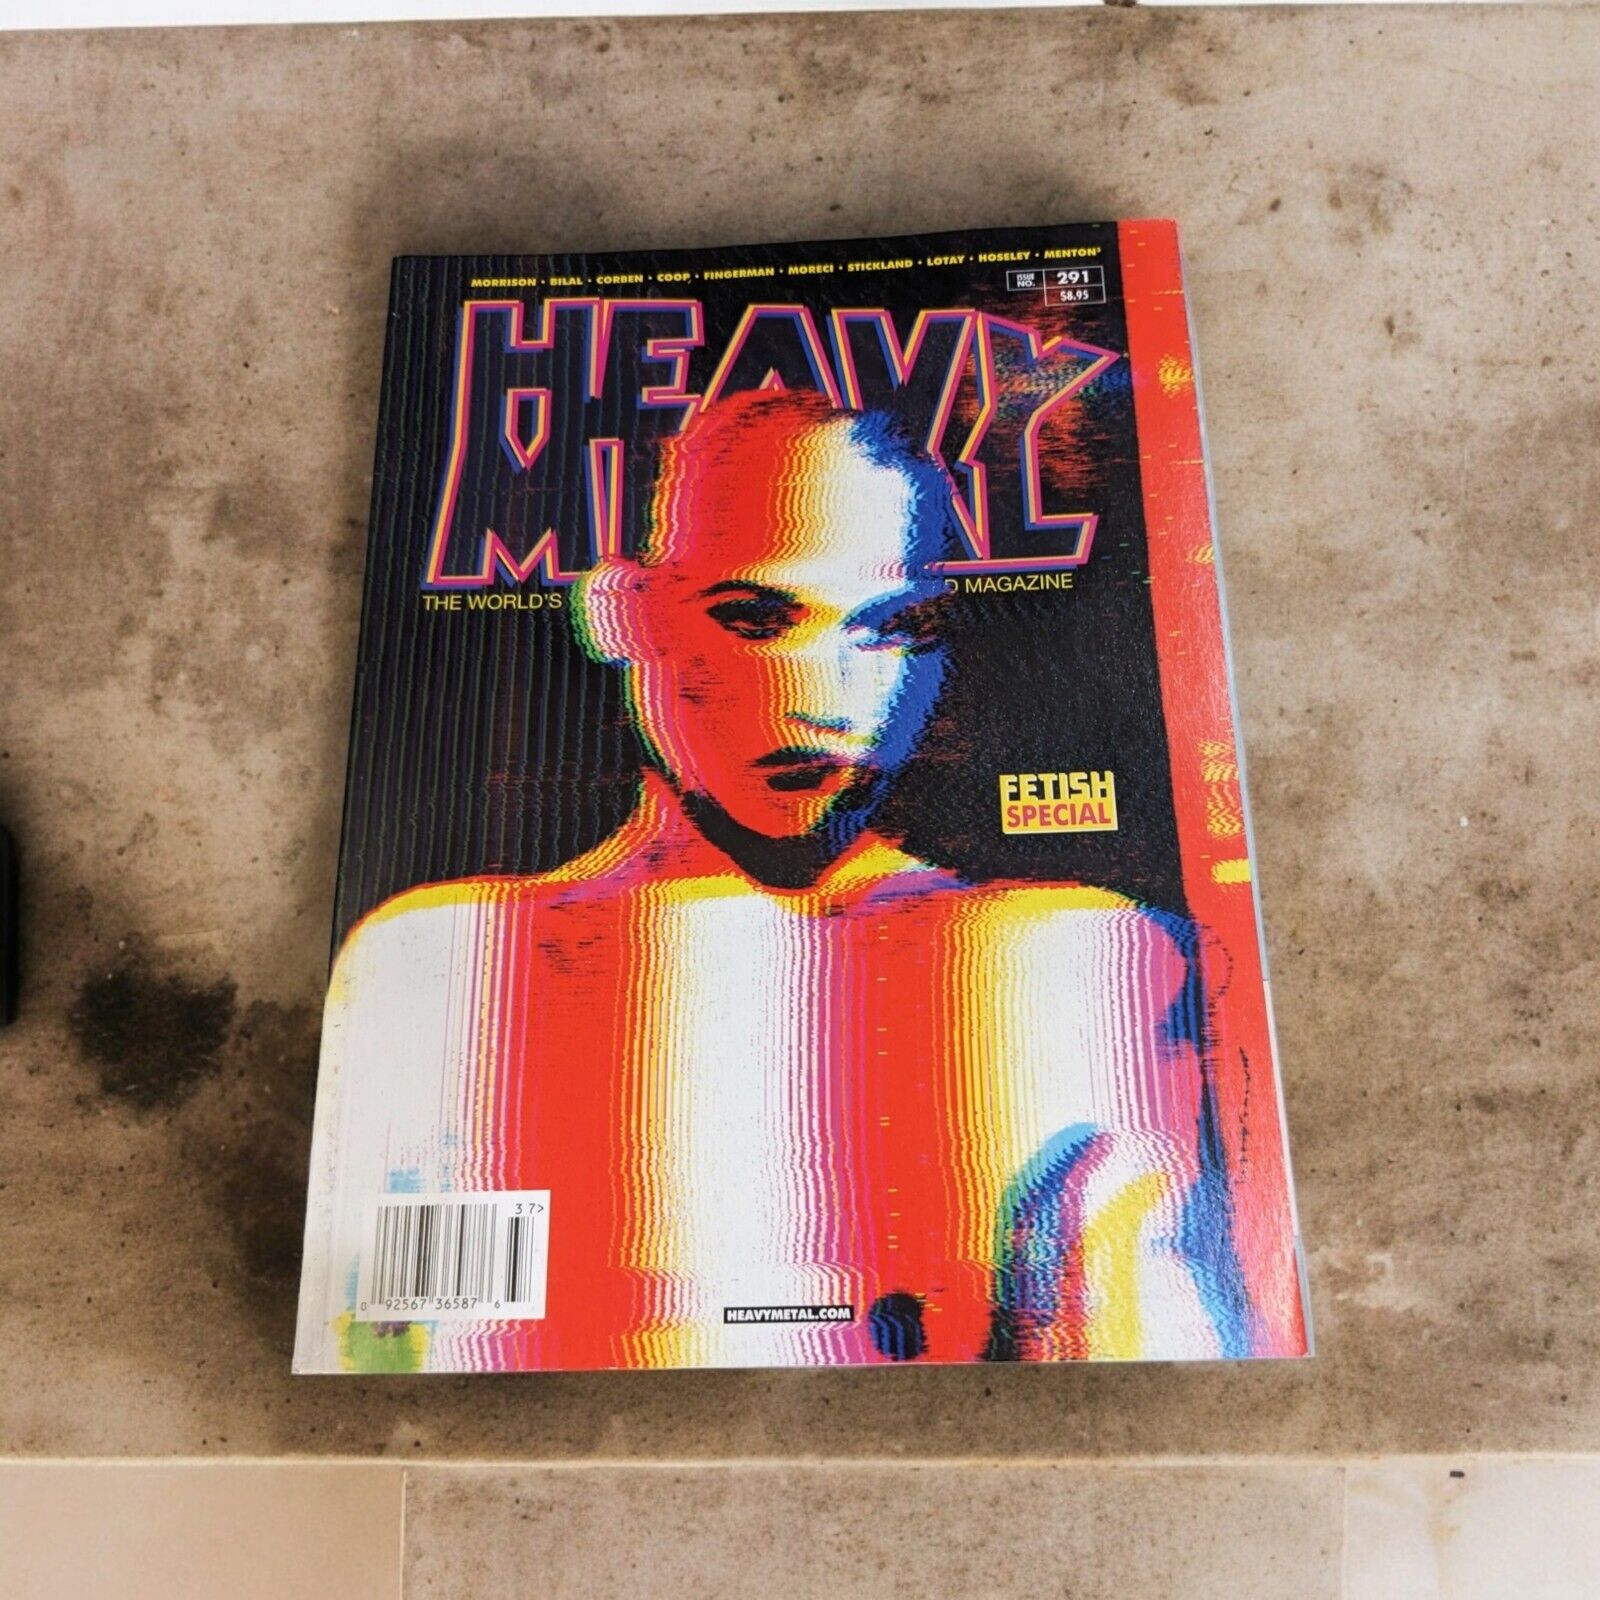 VTG 2018 Heavy Metal Magazine #291 VF Harvey & Edeyr Cover Art Fetish Special